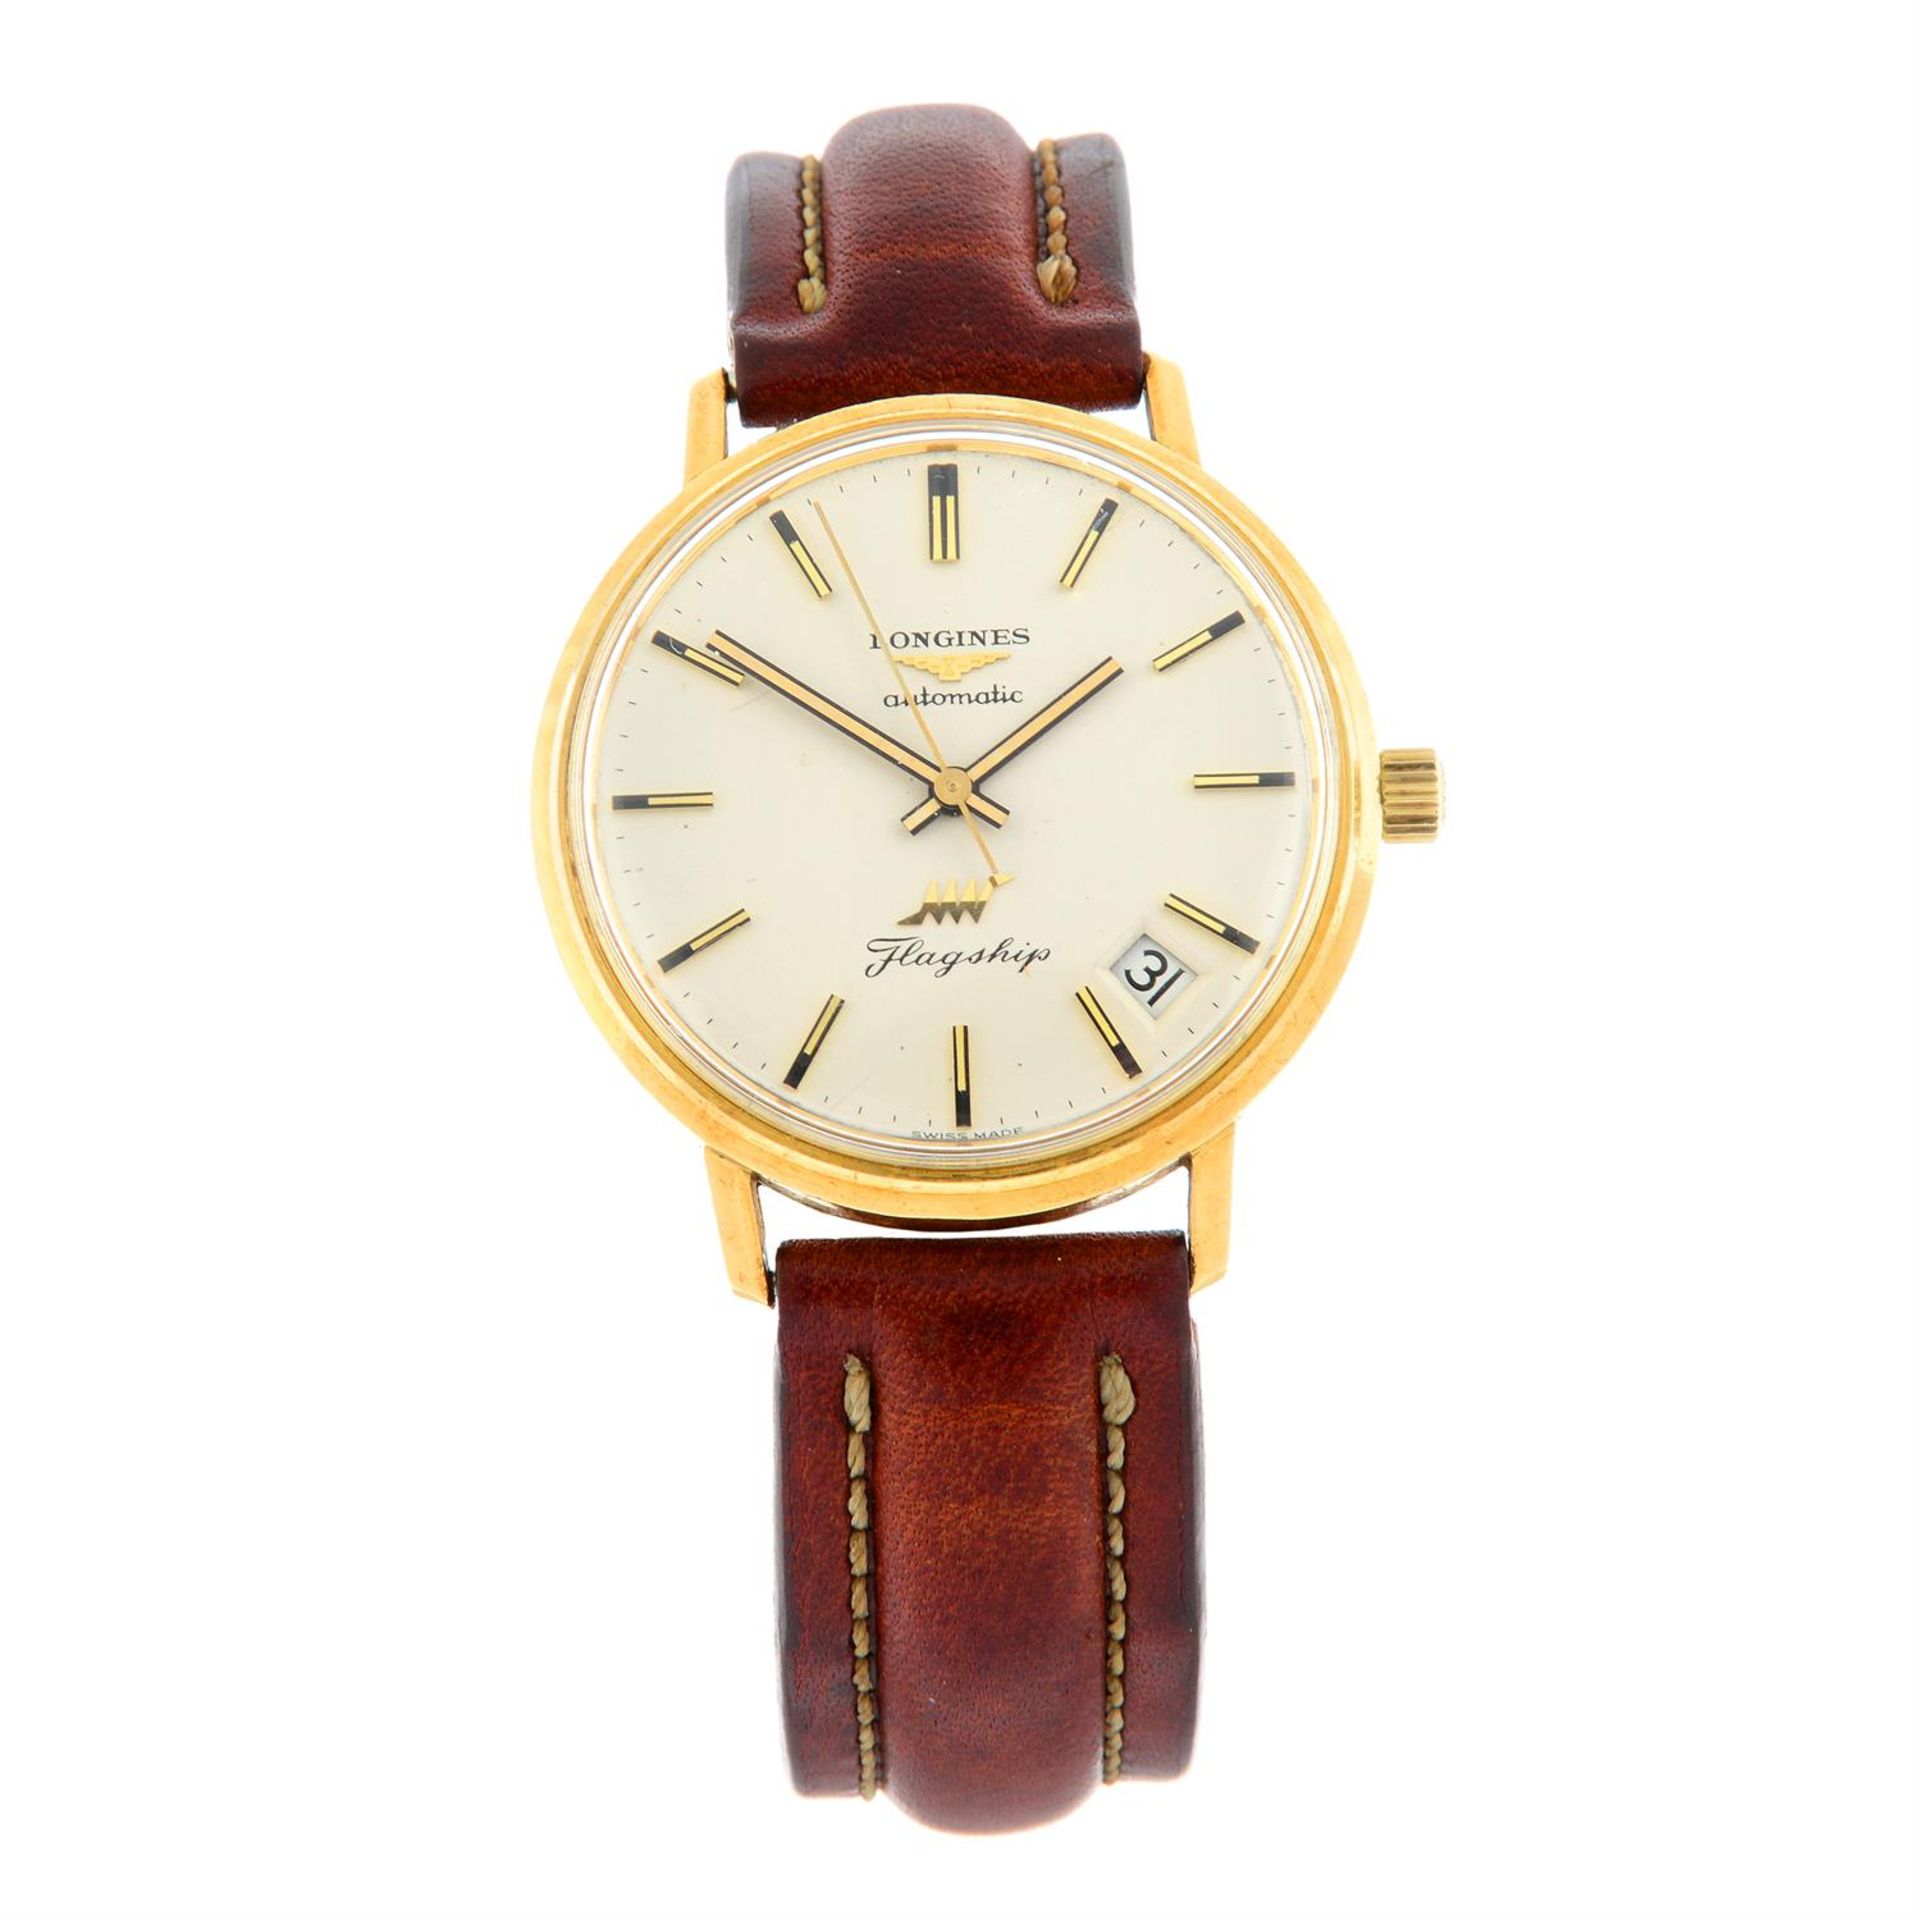 LONGINES - a yellow metal Flagship wrist watch, 35mm.